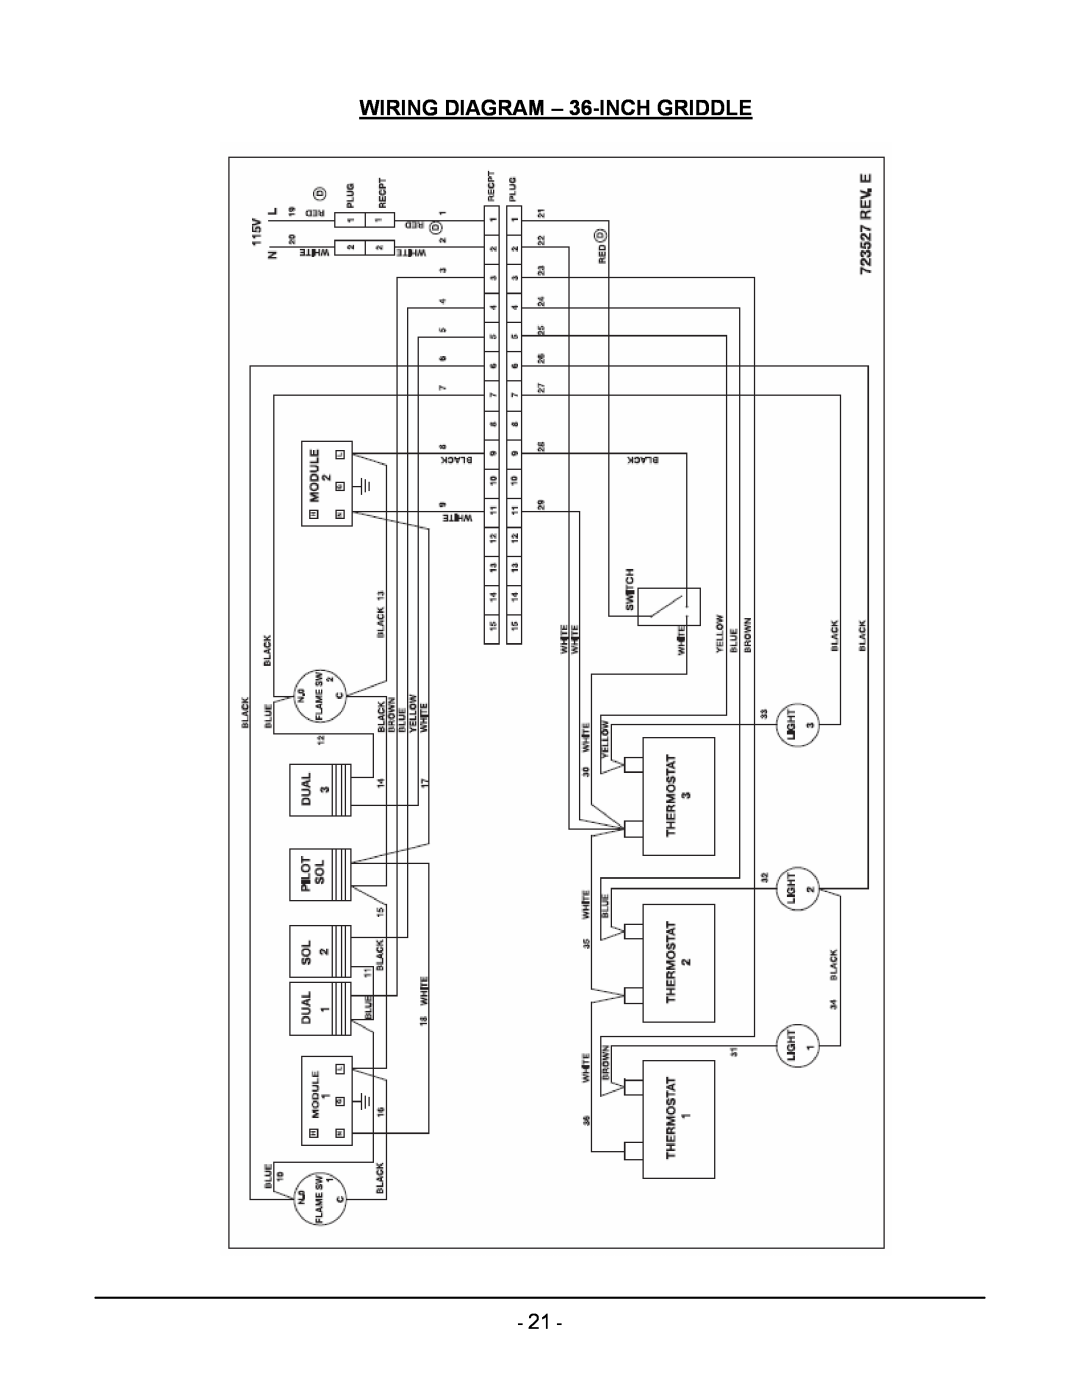 Vulcan-Hart ML-136221-00G24 manual WIRING DIAGRAM - 36-INCH GRIDDLE 